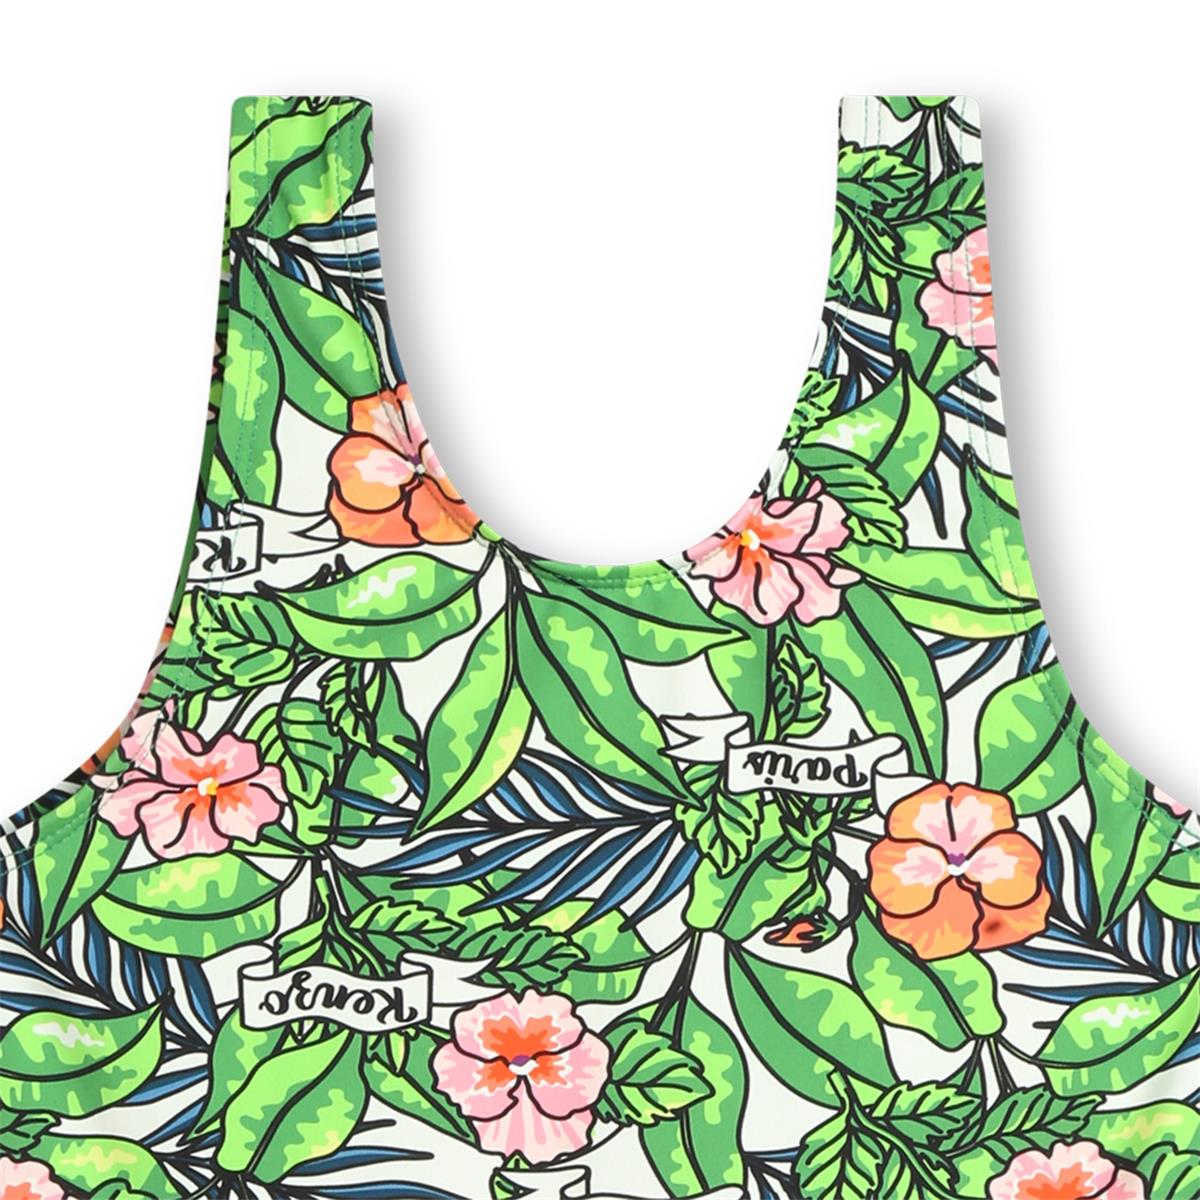 Girls Green Flowers Swimsuit